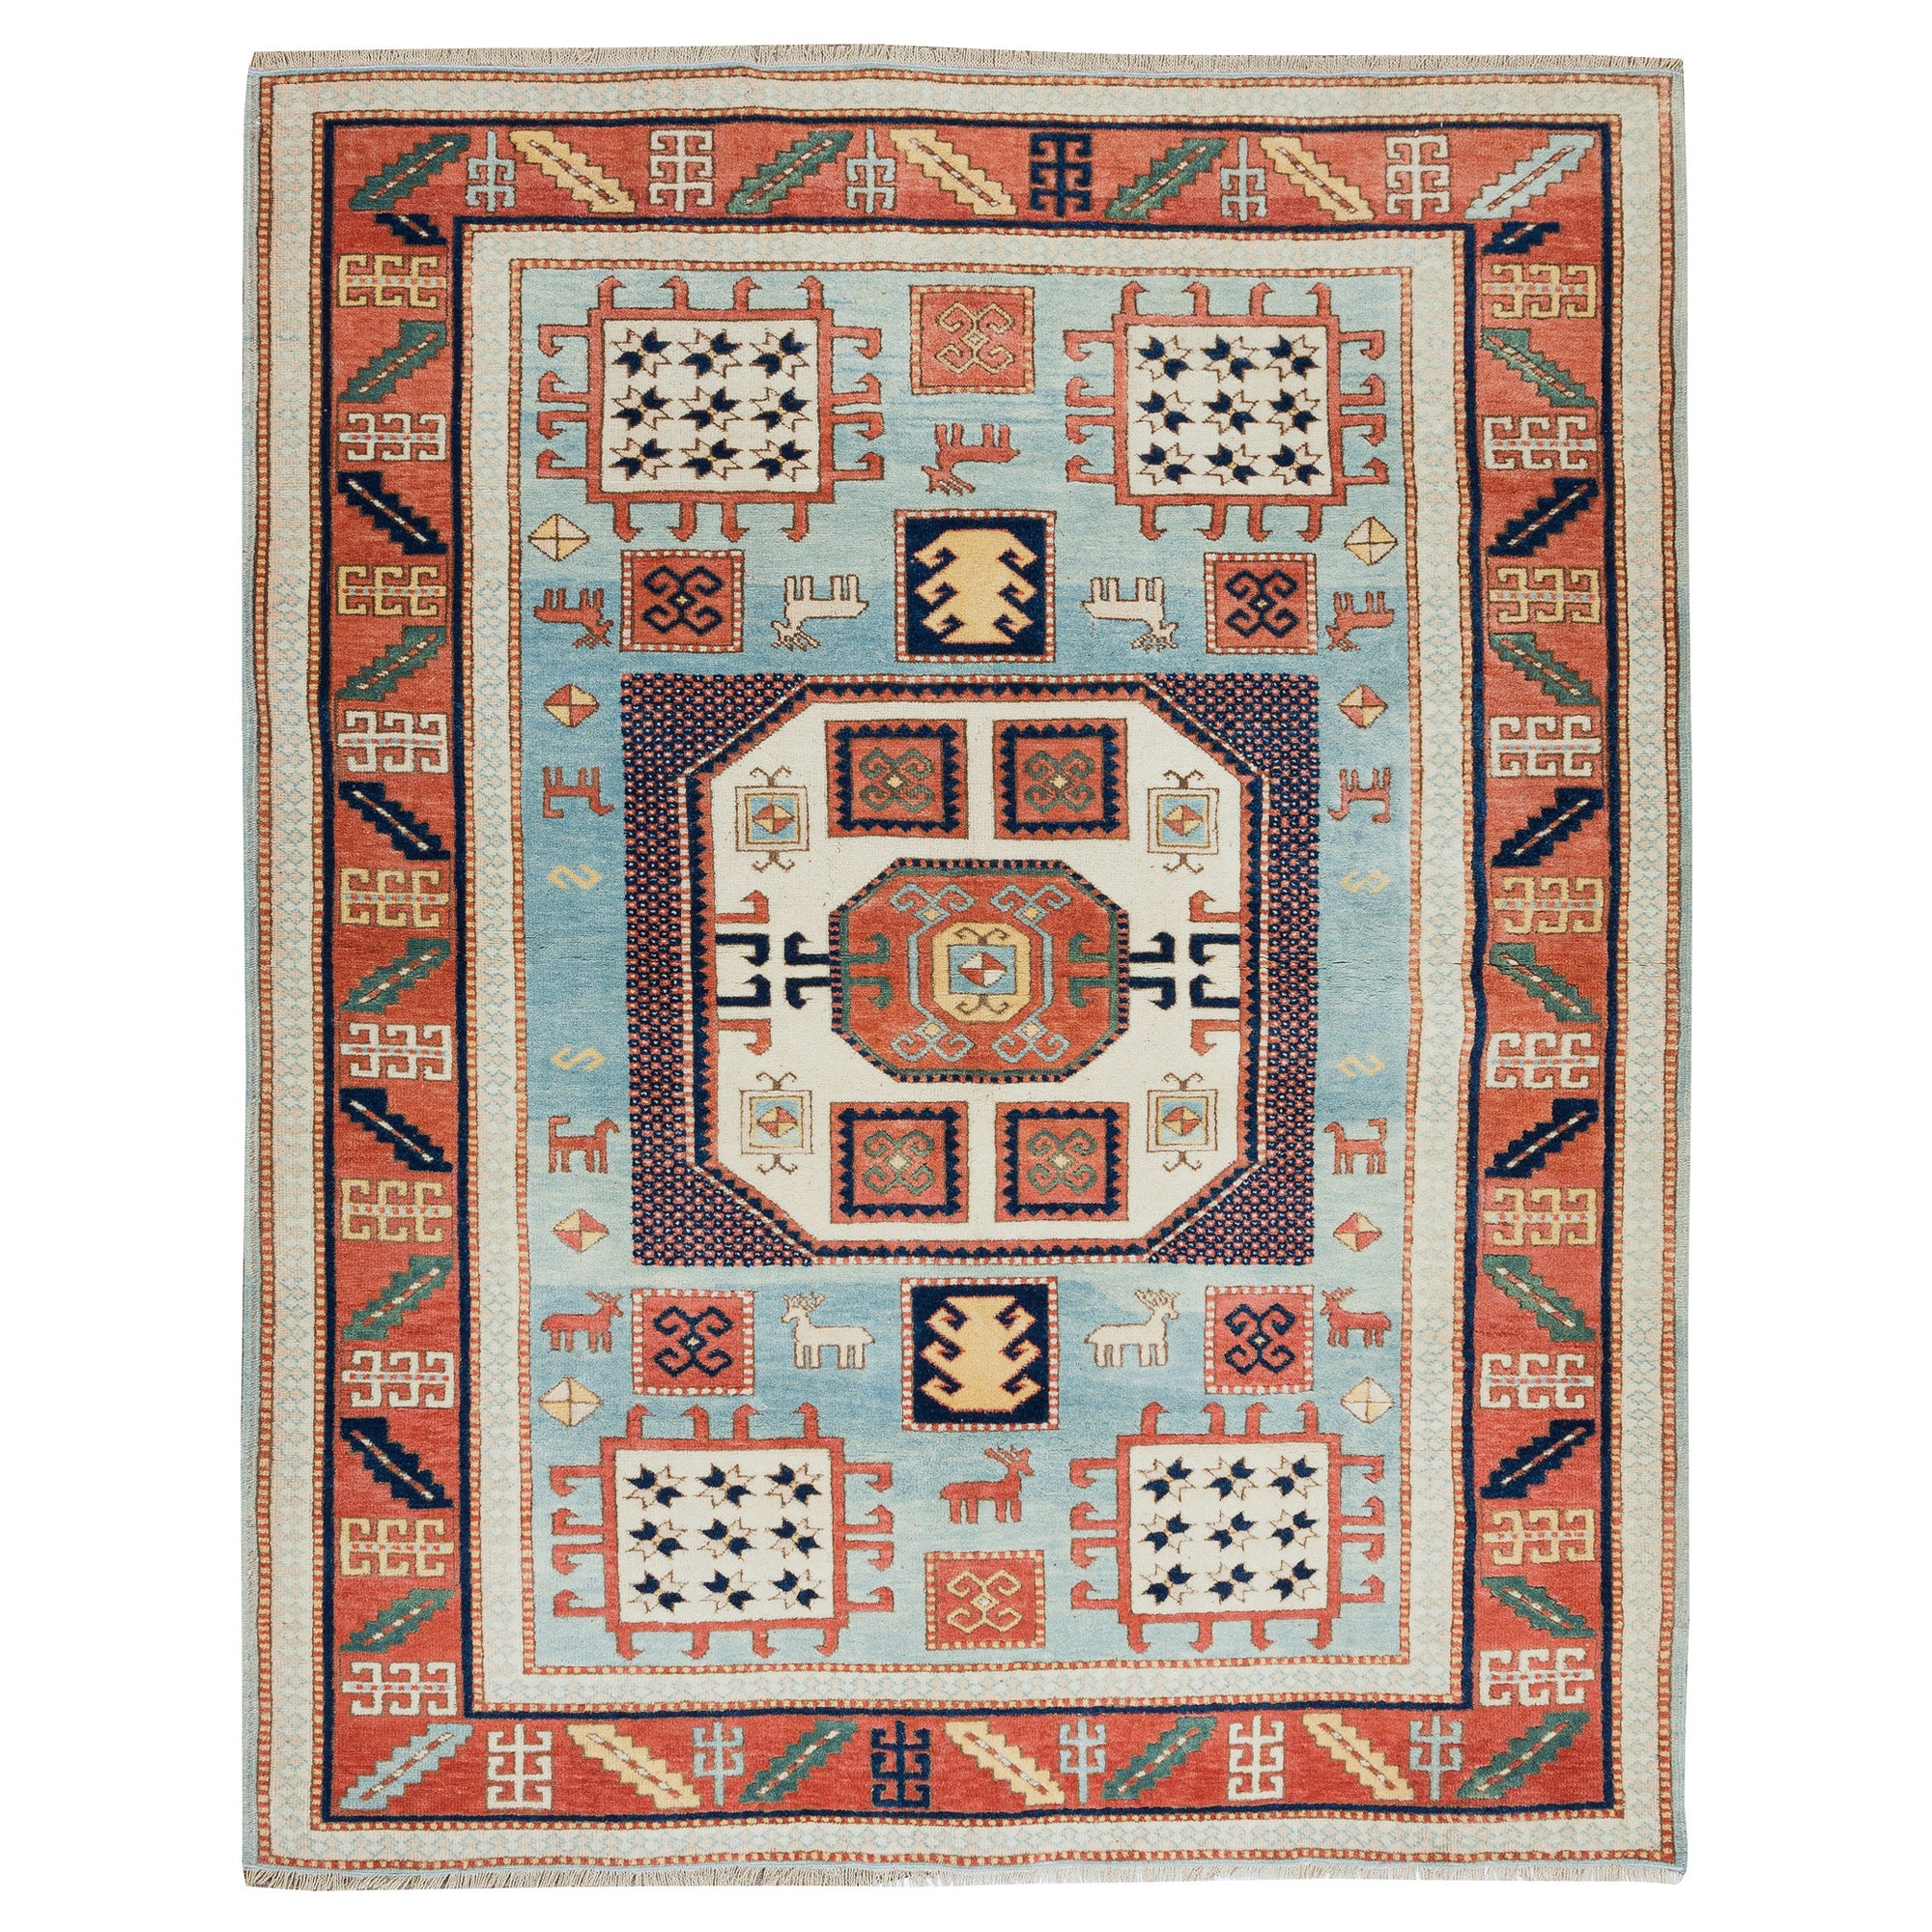 4.8x6 Ft Handmade Area Rug with Geometric Design, Modern Turkish Carpet